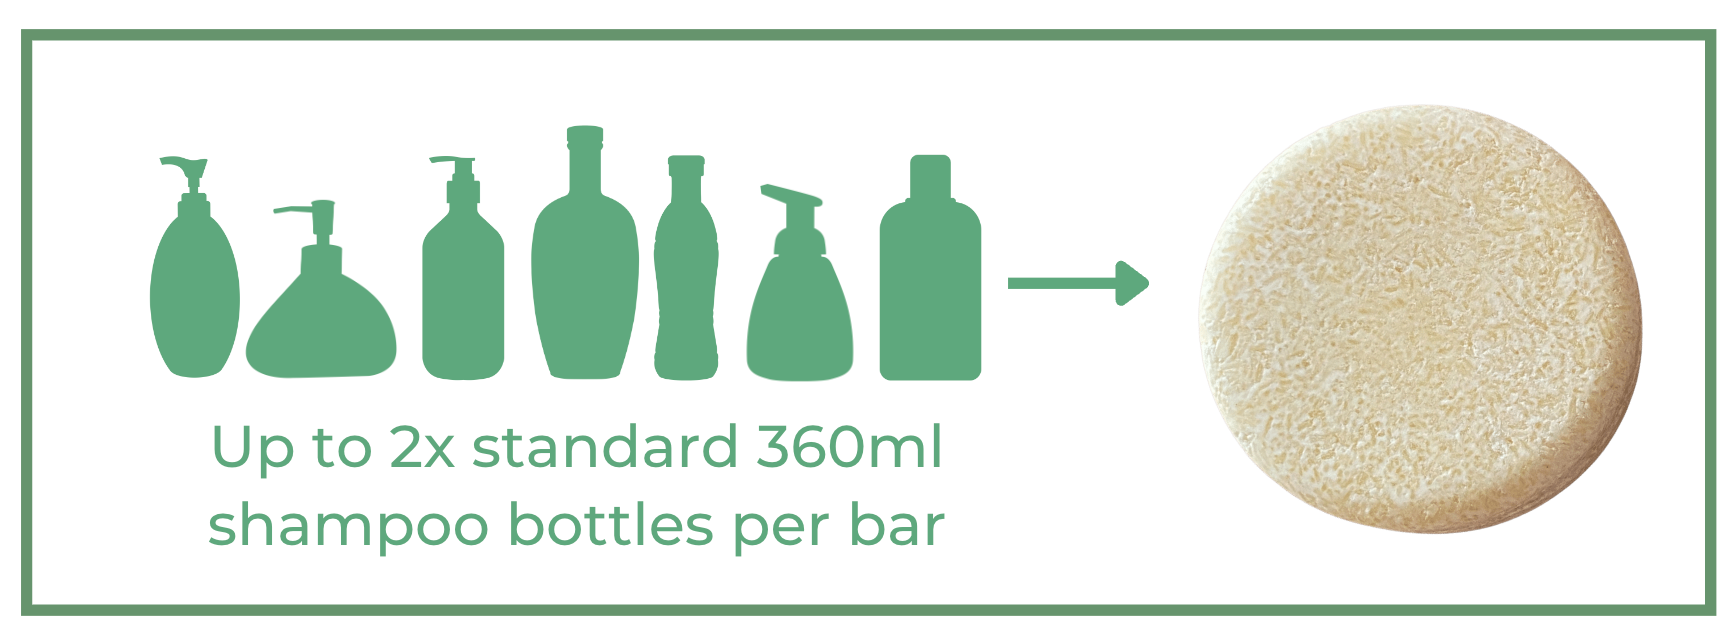 2x standard 360ml shampoo bottles per bar